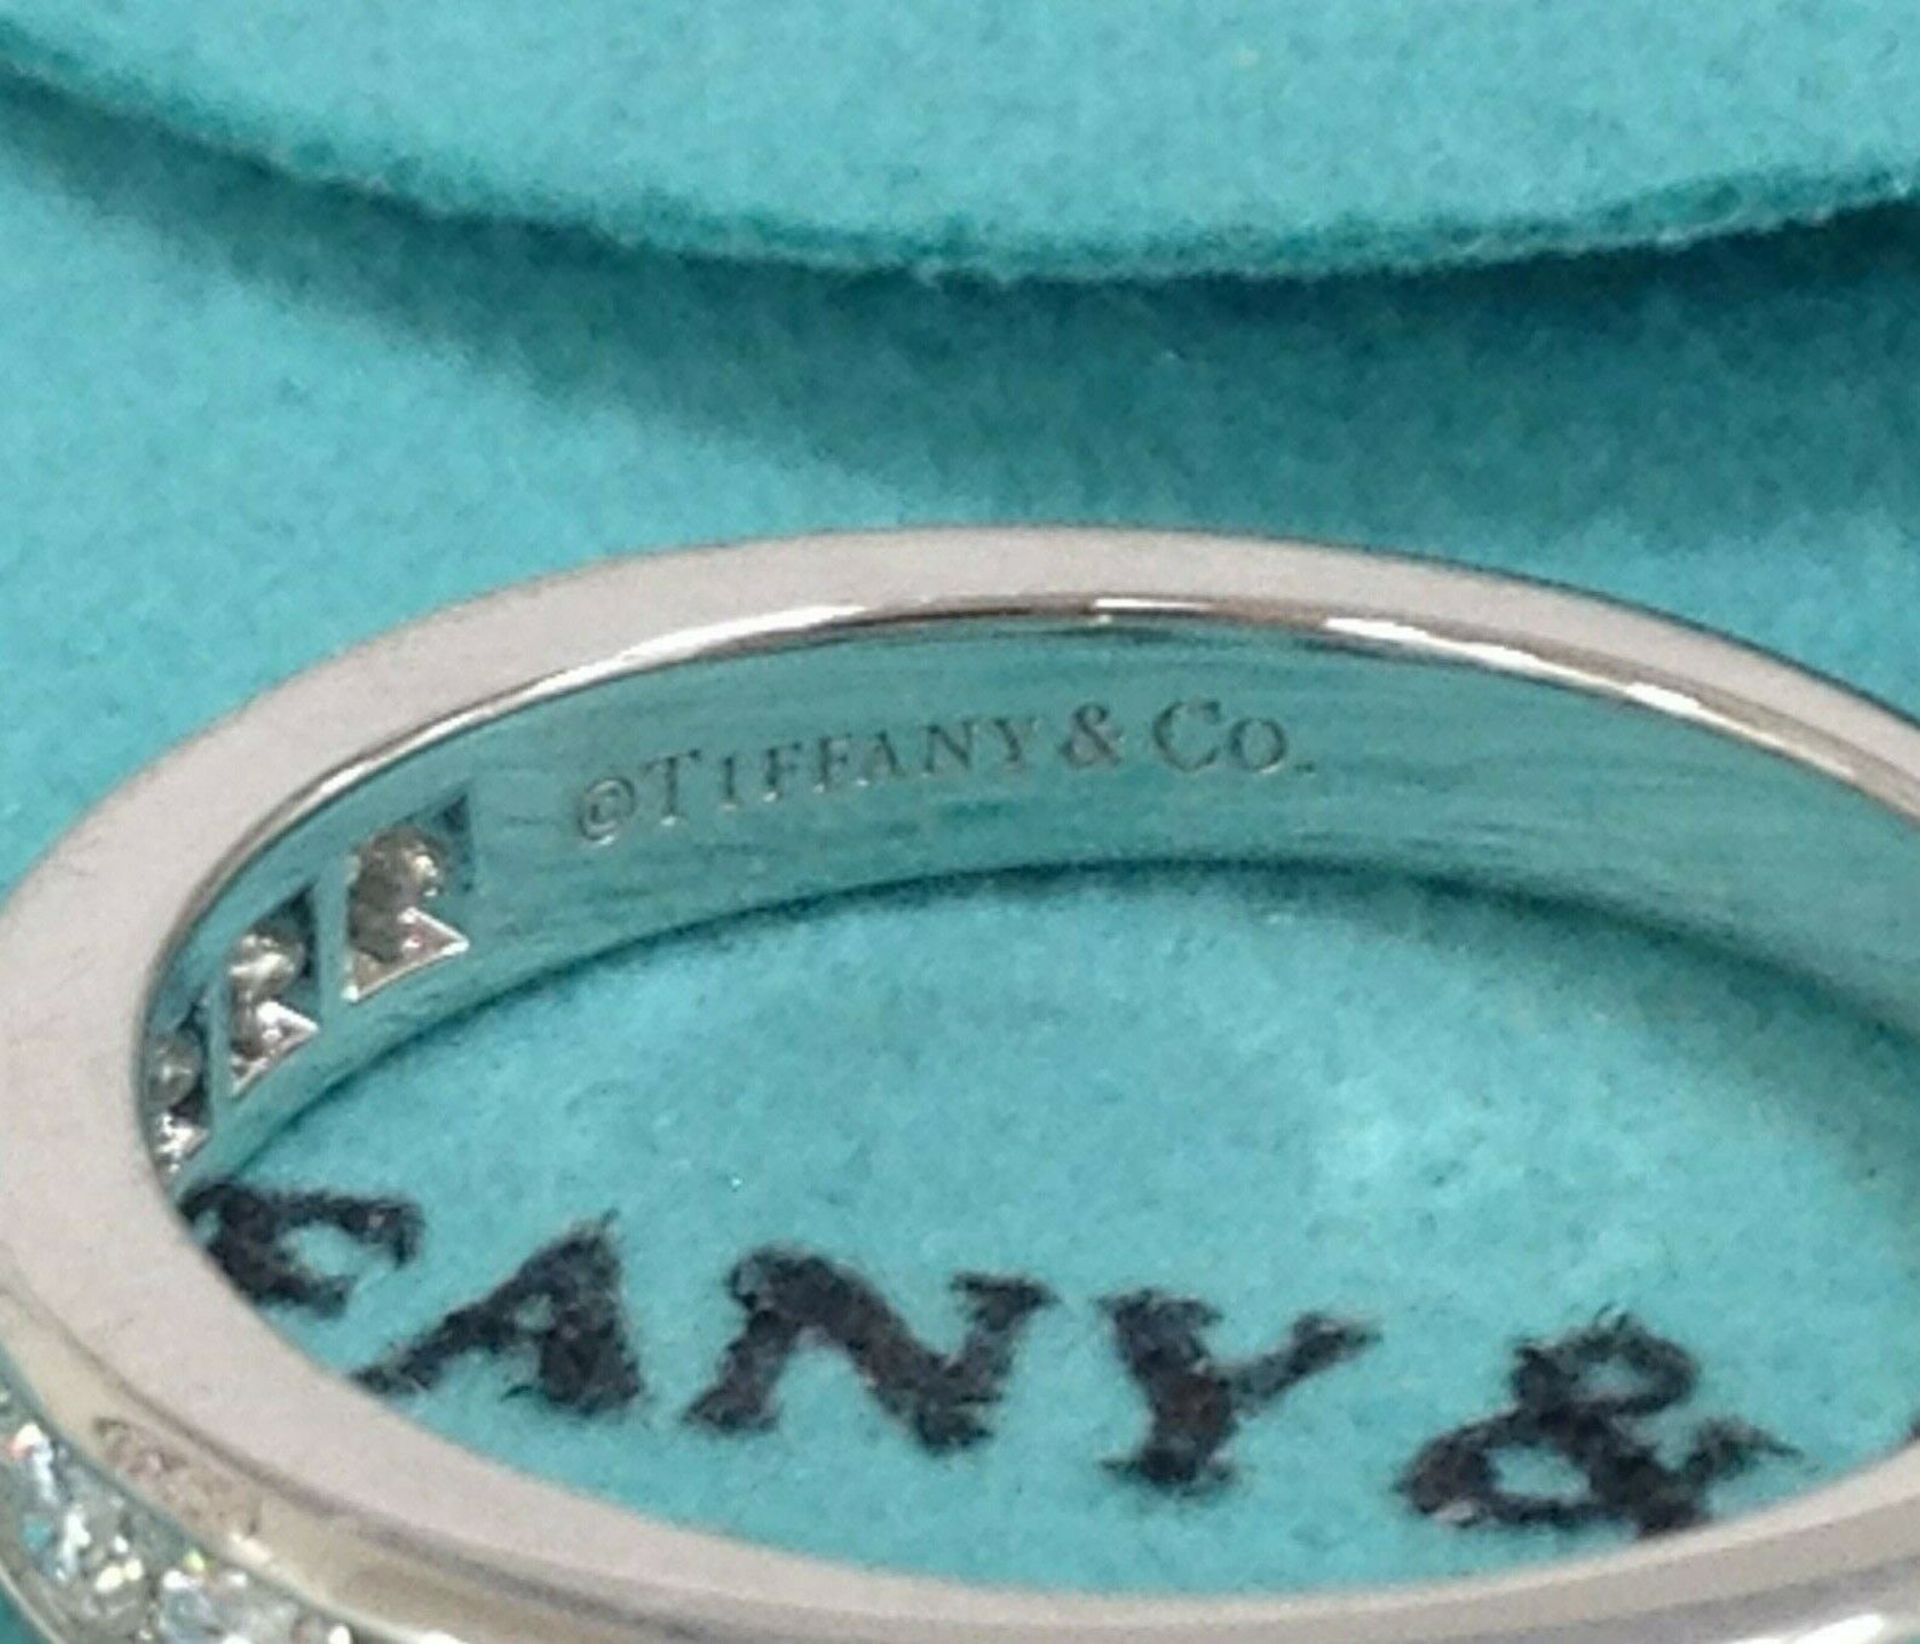 Tiffany & Co 950 Platinum Half Eternity 0.33 ctw Diamond Wedding Ring Band Size 5.75 - Image 2 of 6